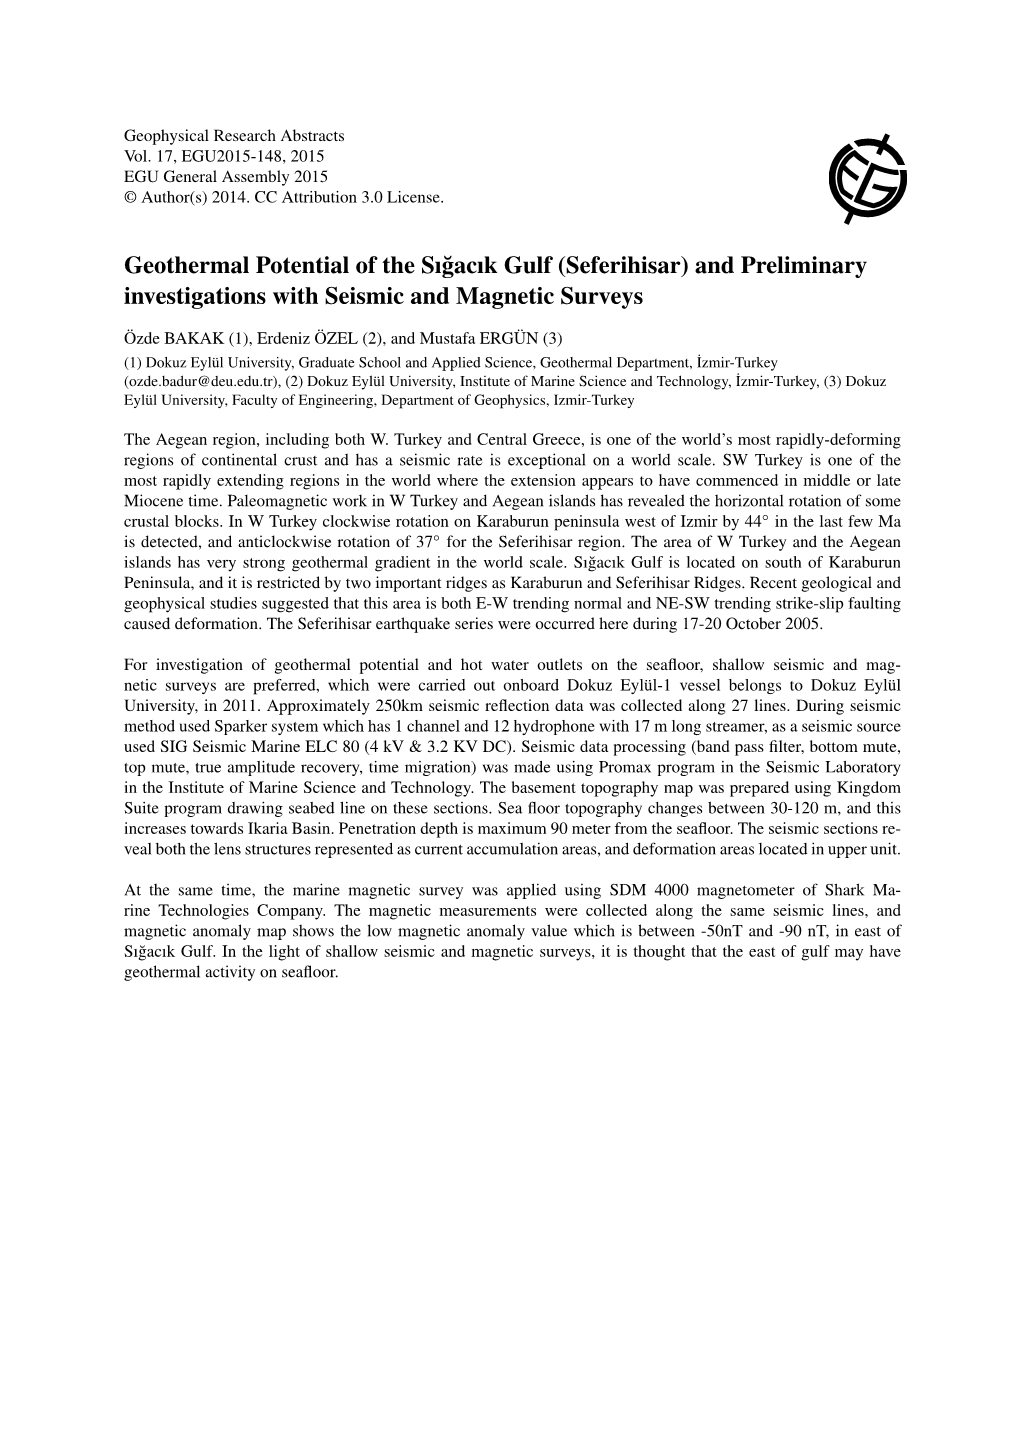 Geothermal Potential of the Sı˘Gacık Gulf (Seferihisar) and Preliminary